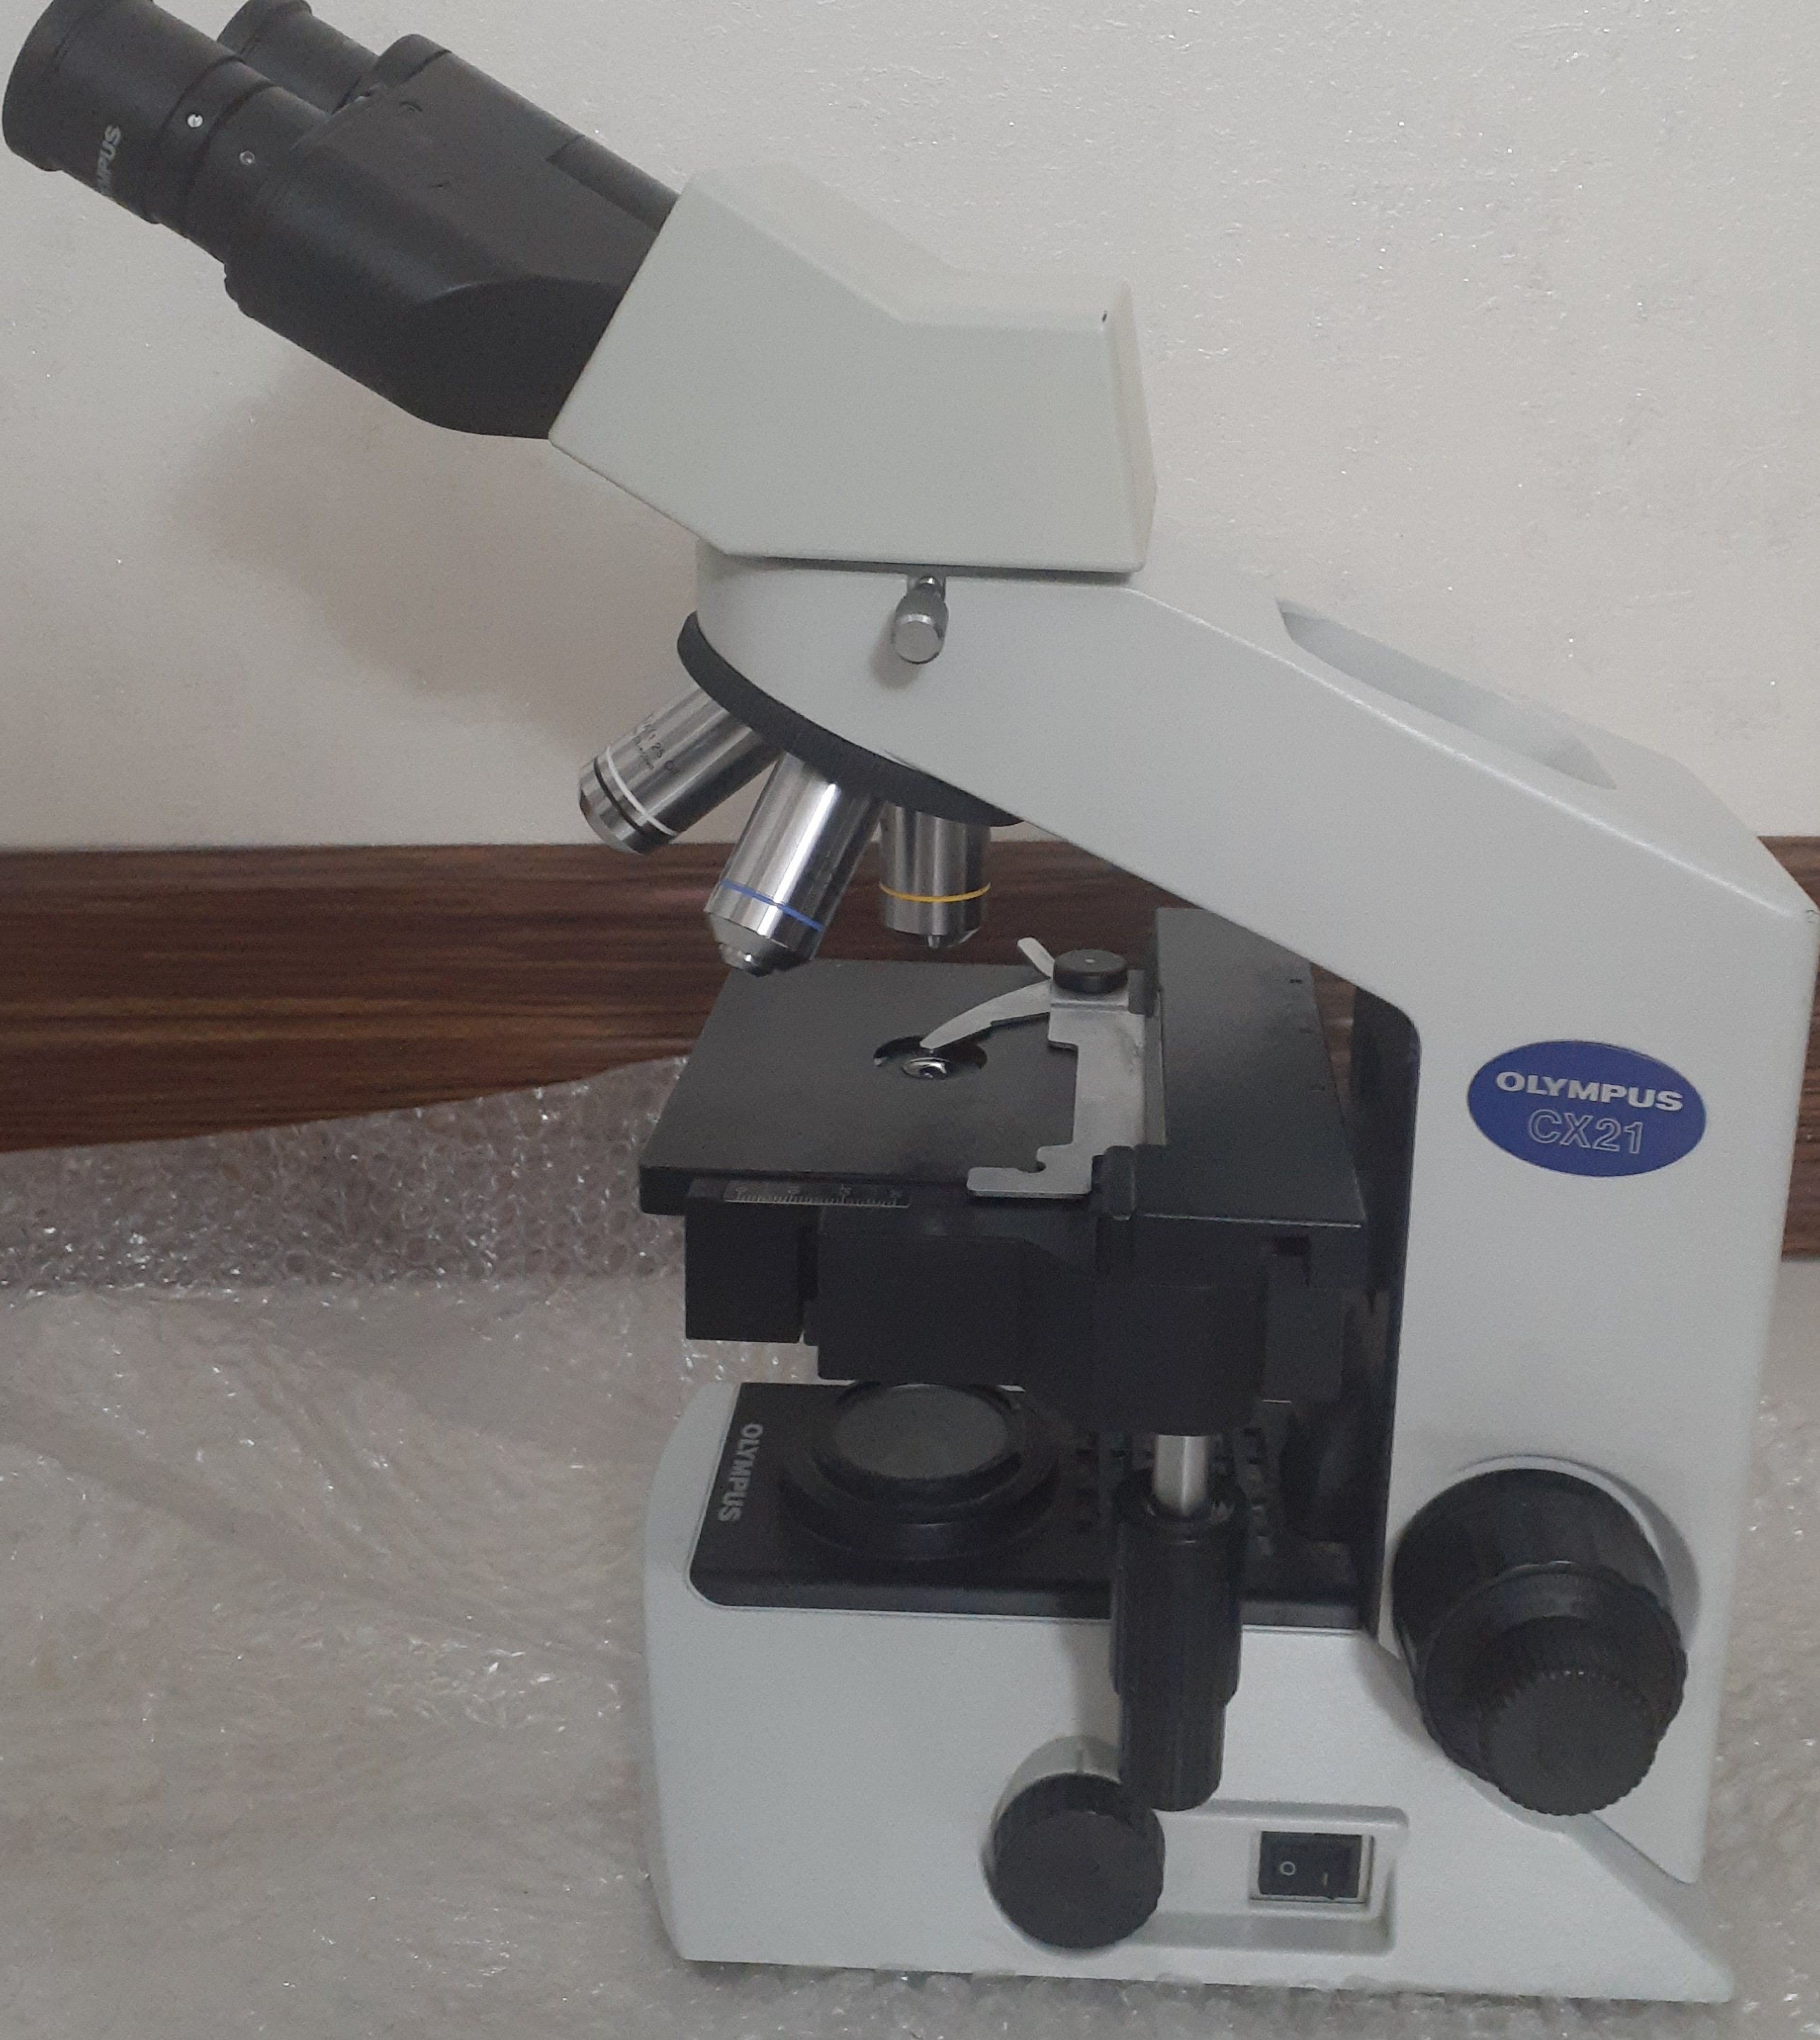 میکروسکوپ المپیوس CX21